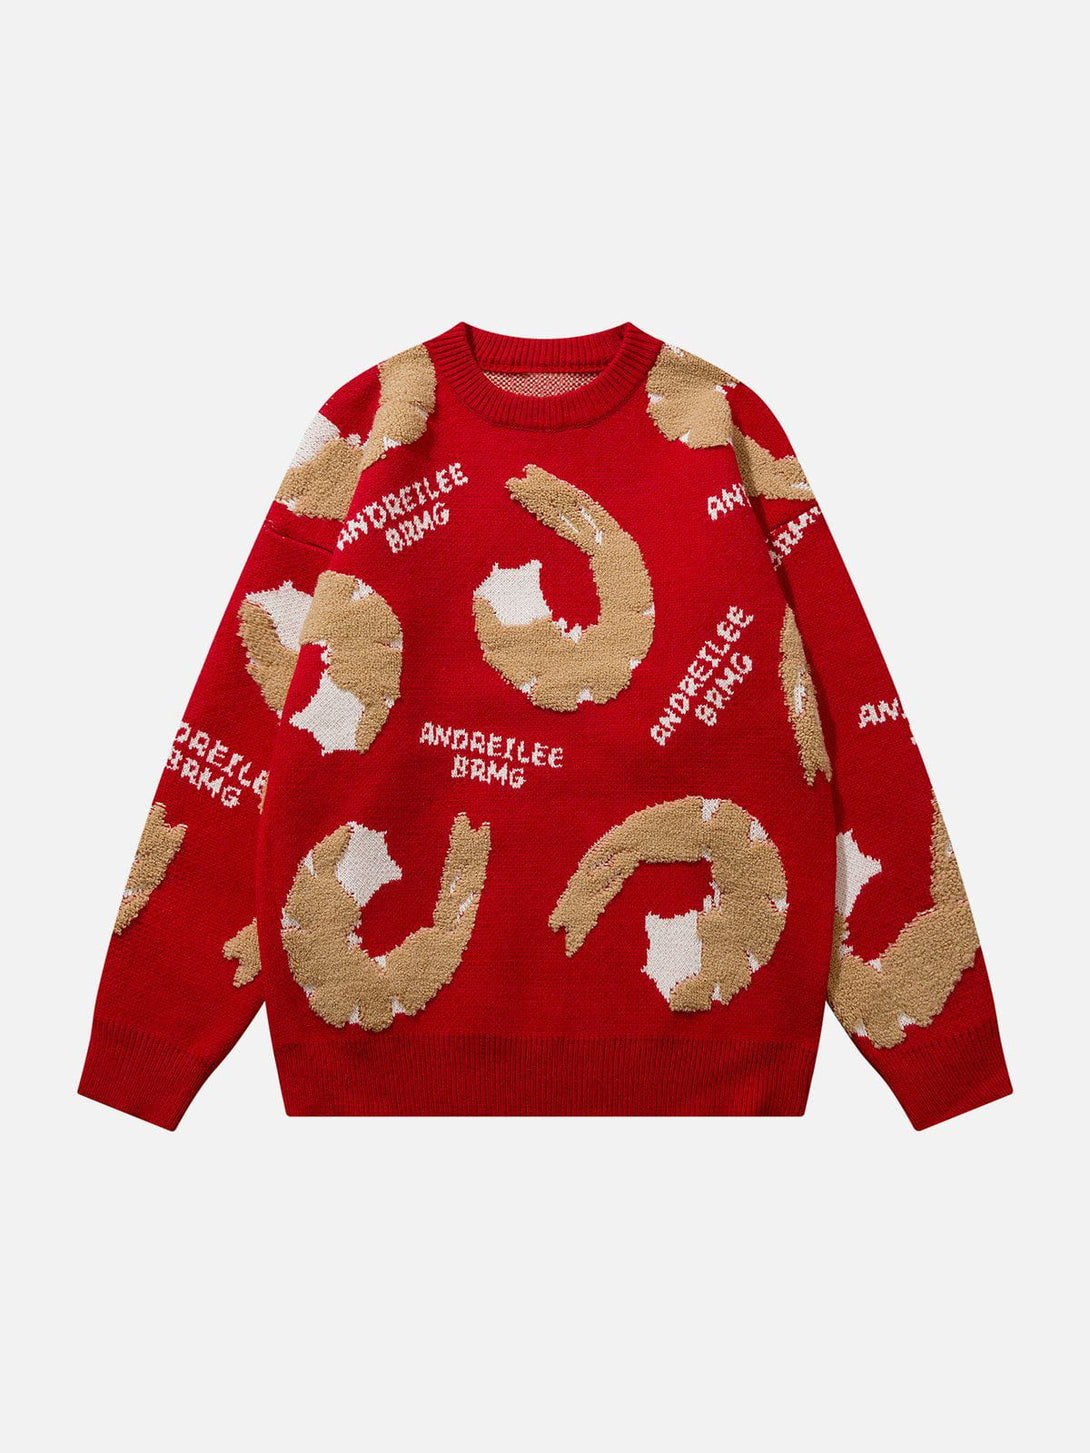 Majesda® - Fun Shrimp Jacquard Knit Sweater outfit ideas streetwear fashion